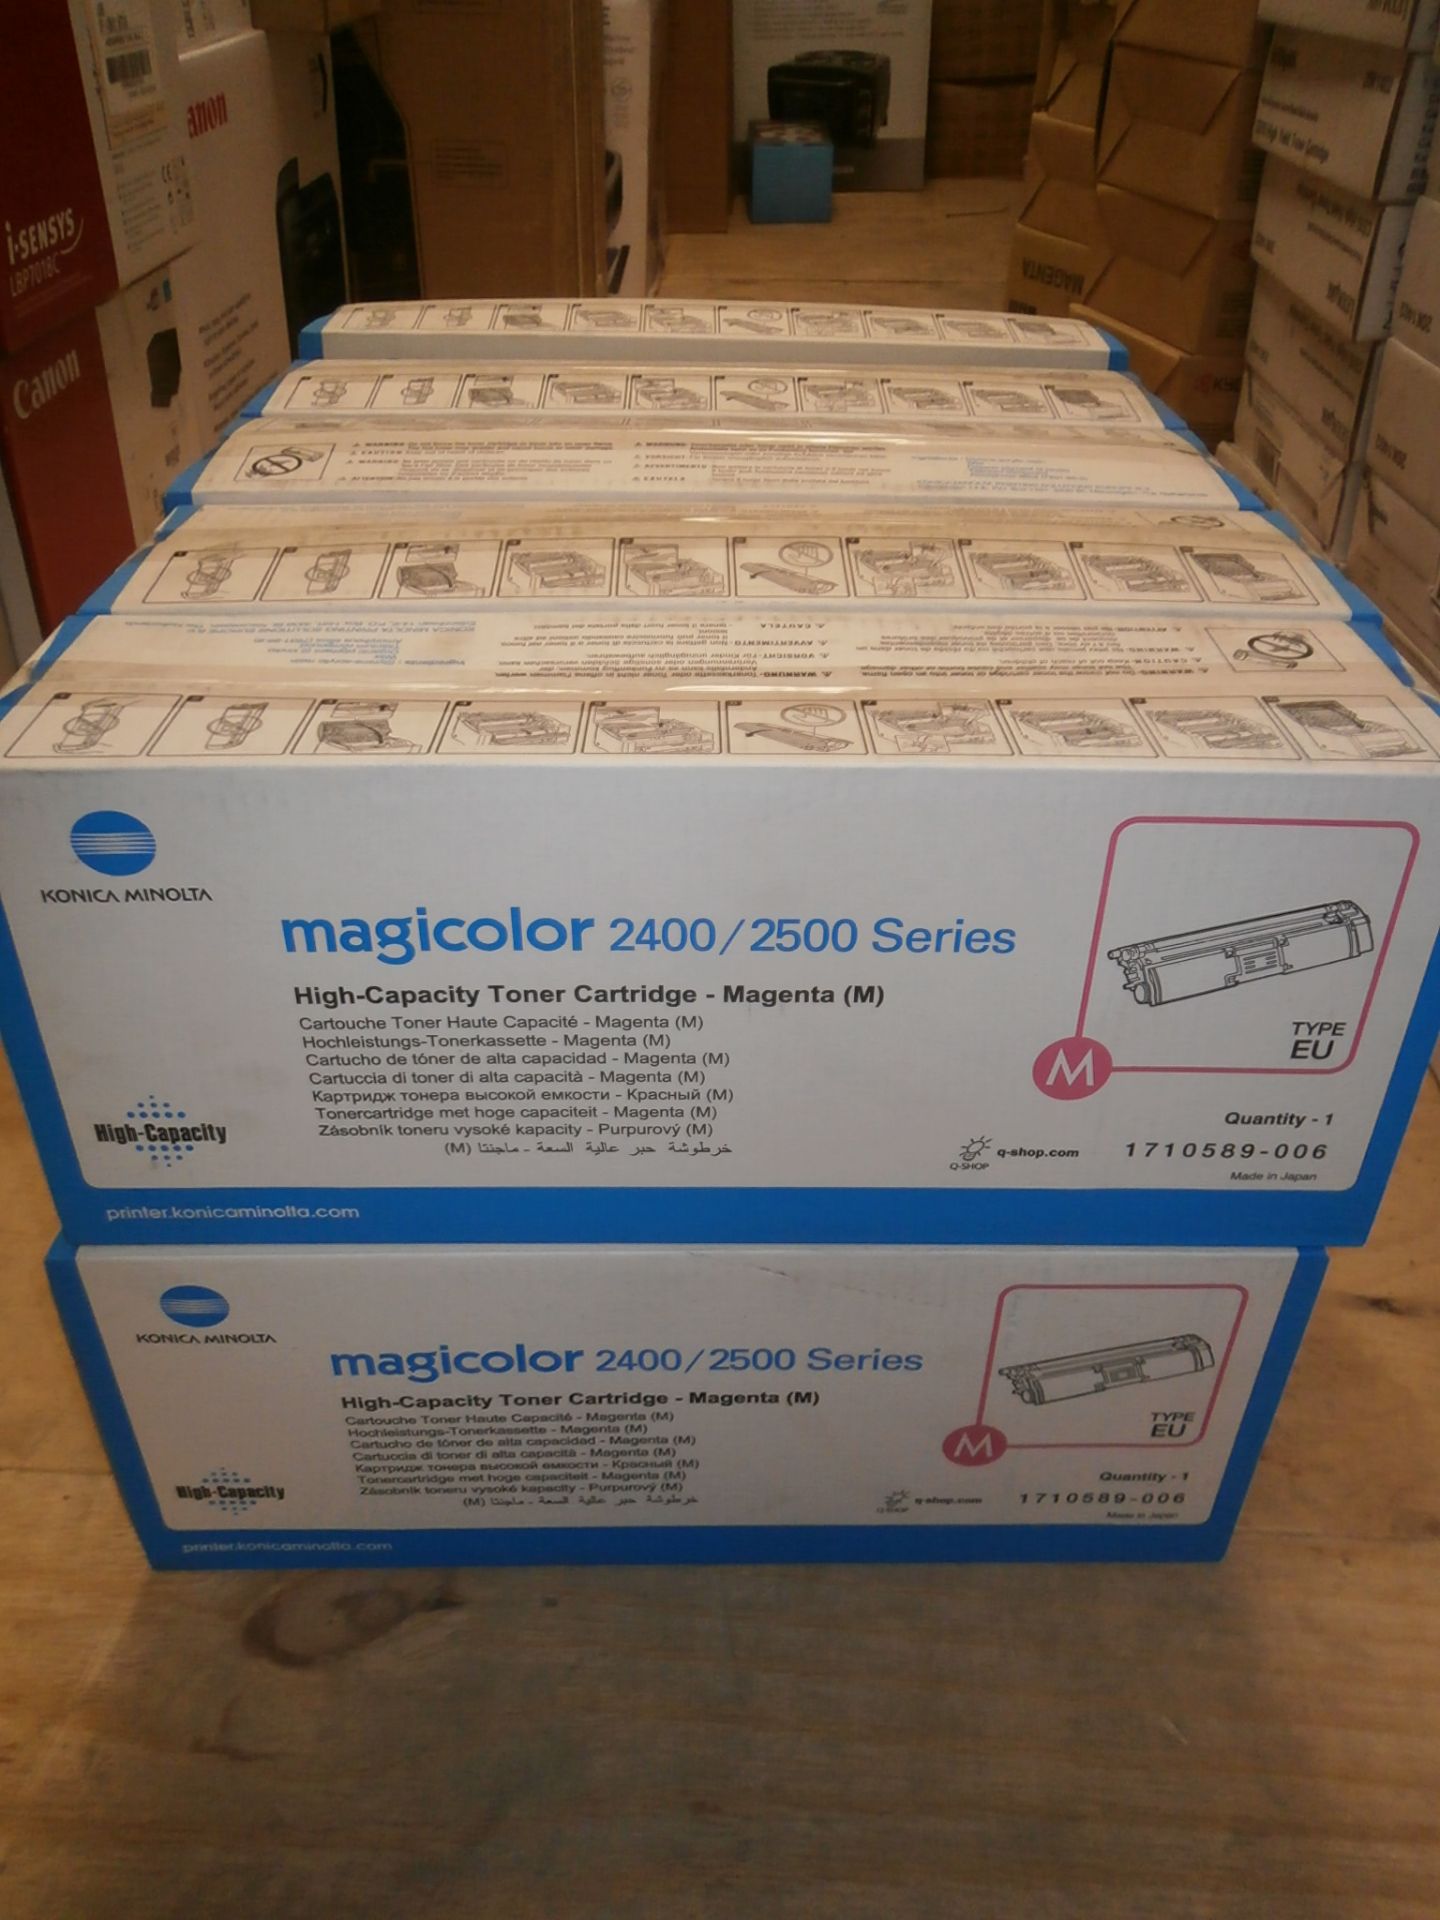 10 x Magicolor 2400/2500 Series High-Capacity Toner Cartridges Magenta - Brand New (RRP £90.92